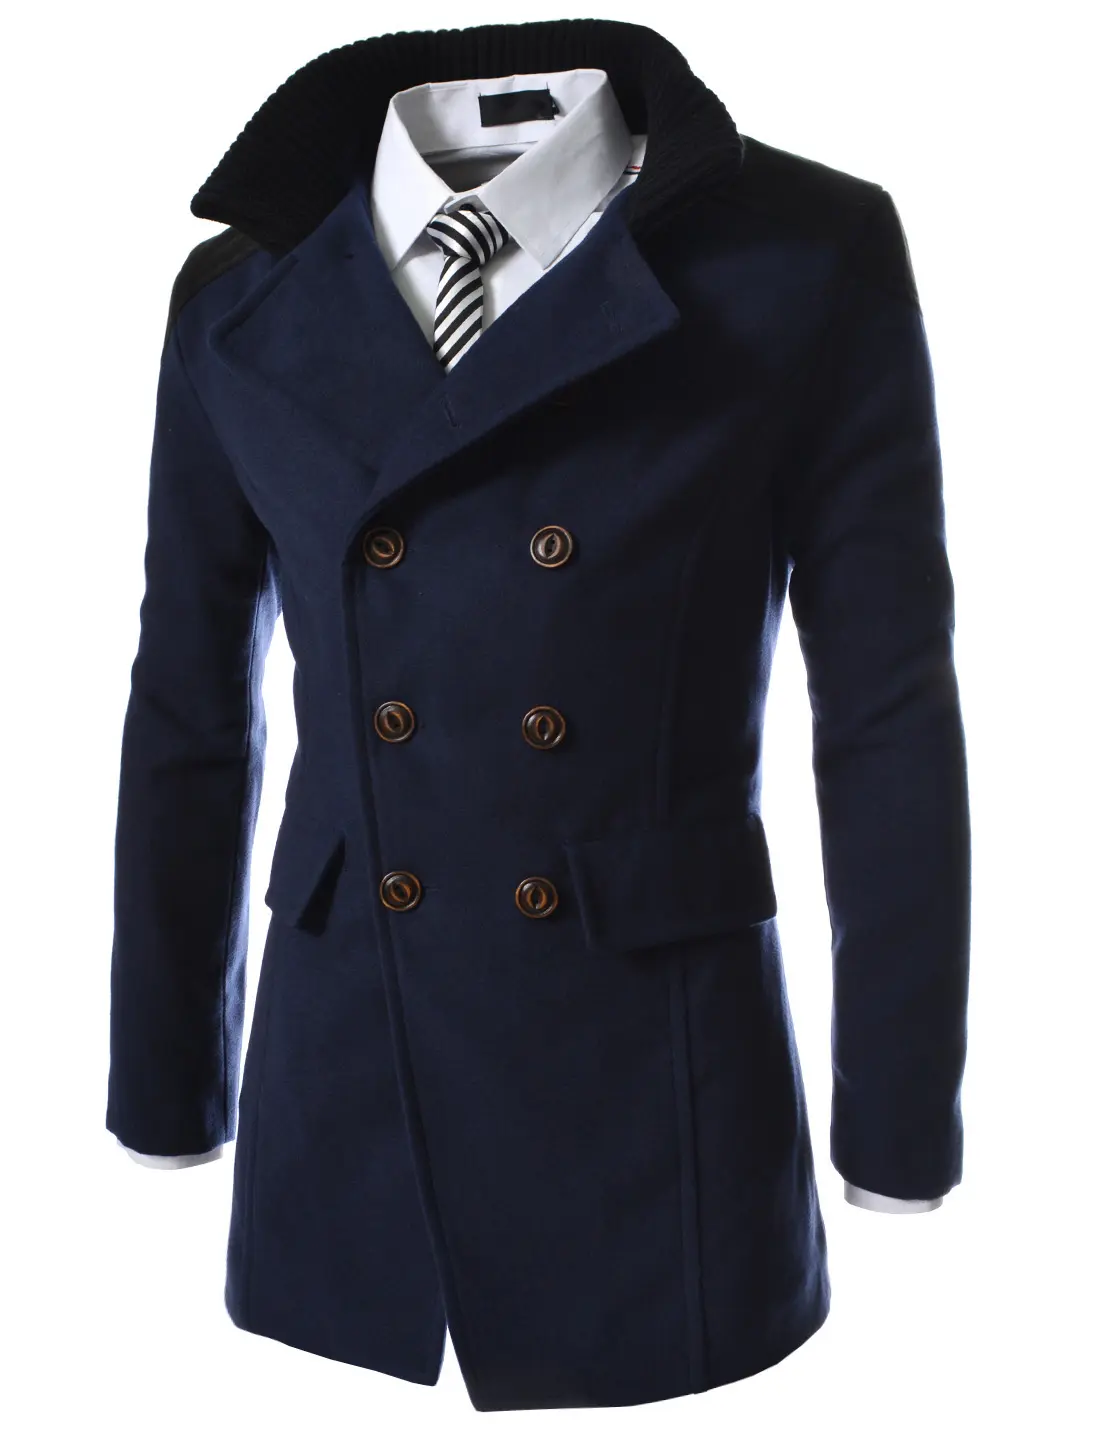 New Autumn Winter Wool Men's Coat Warm Slim Stylish Coat Warm wool coat fashion greatcoat navy color